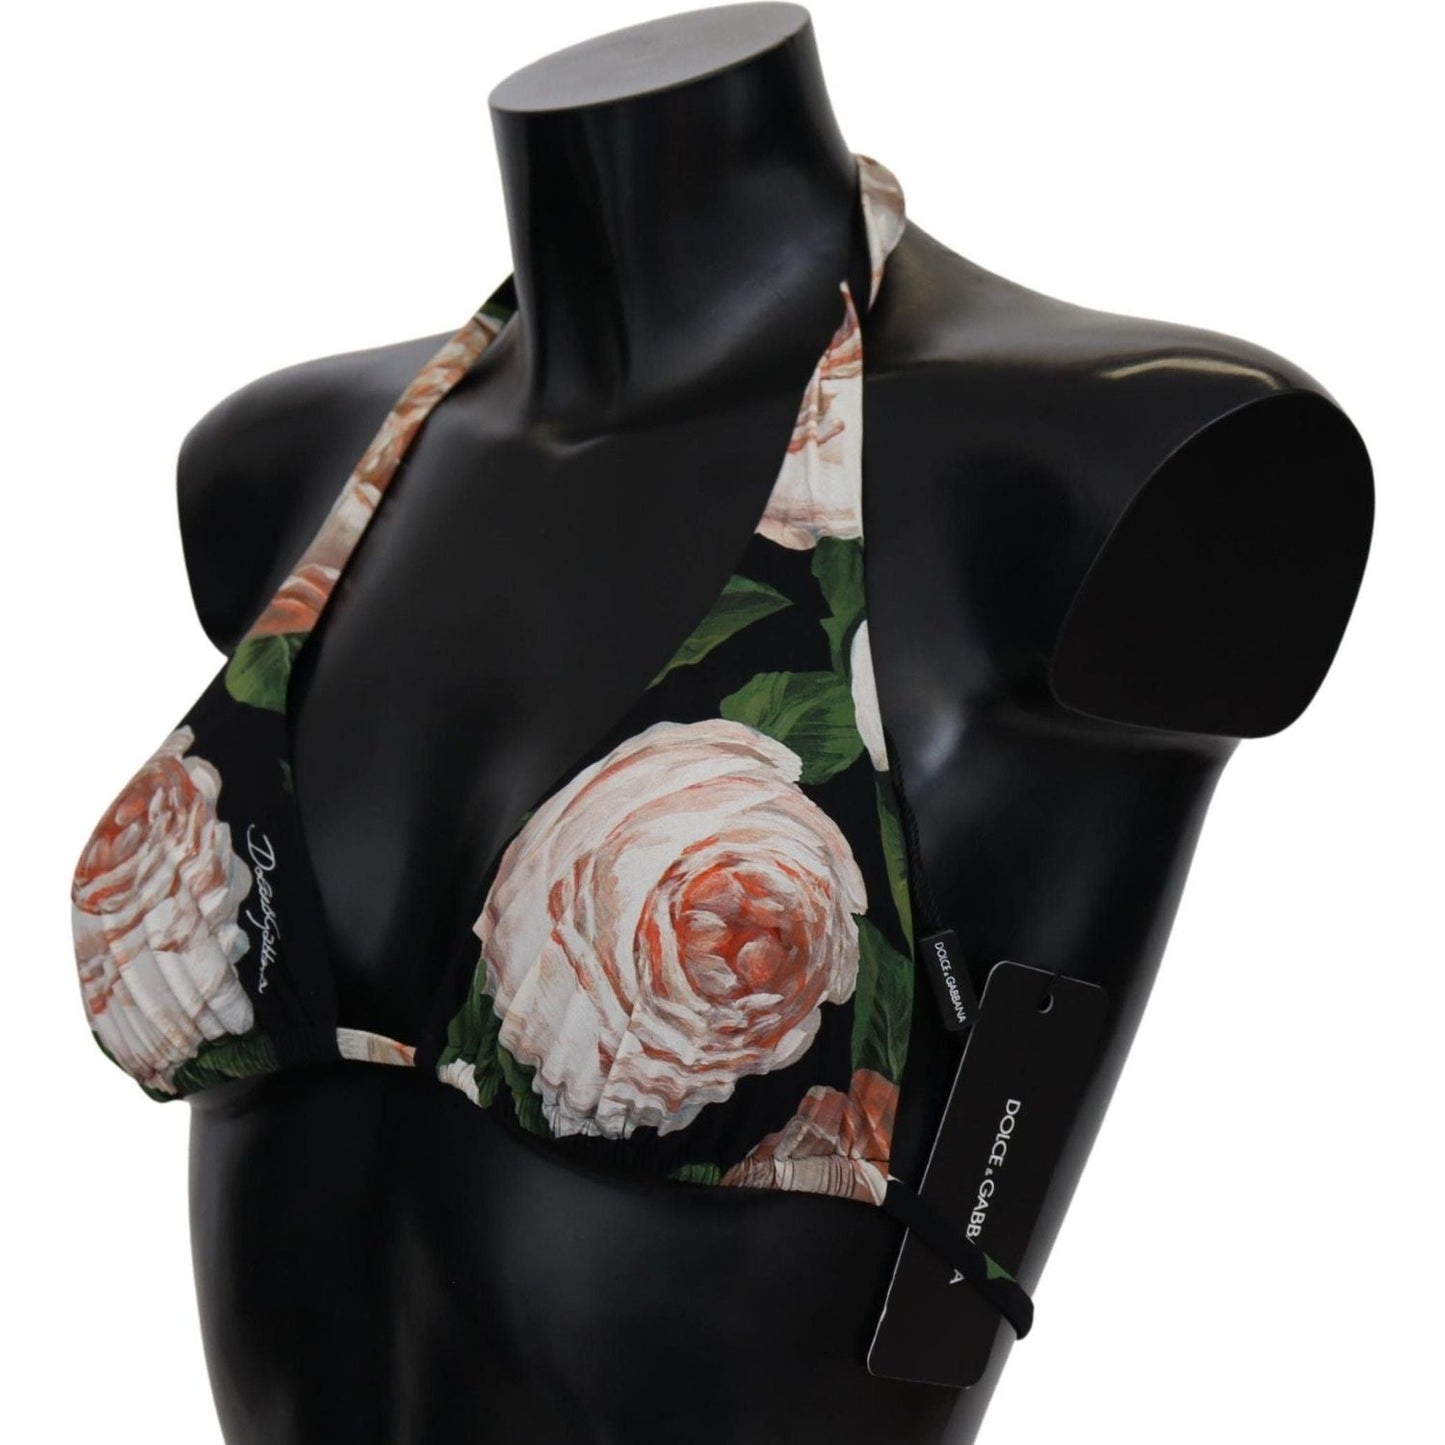 Dolce & Gabbana Elegant Floral Print Bikini Top multicolor-floral-print-beachwear-bikini-tops-3